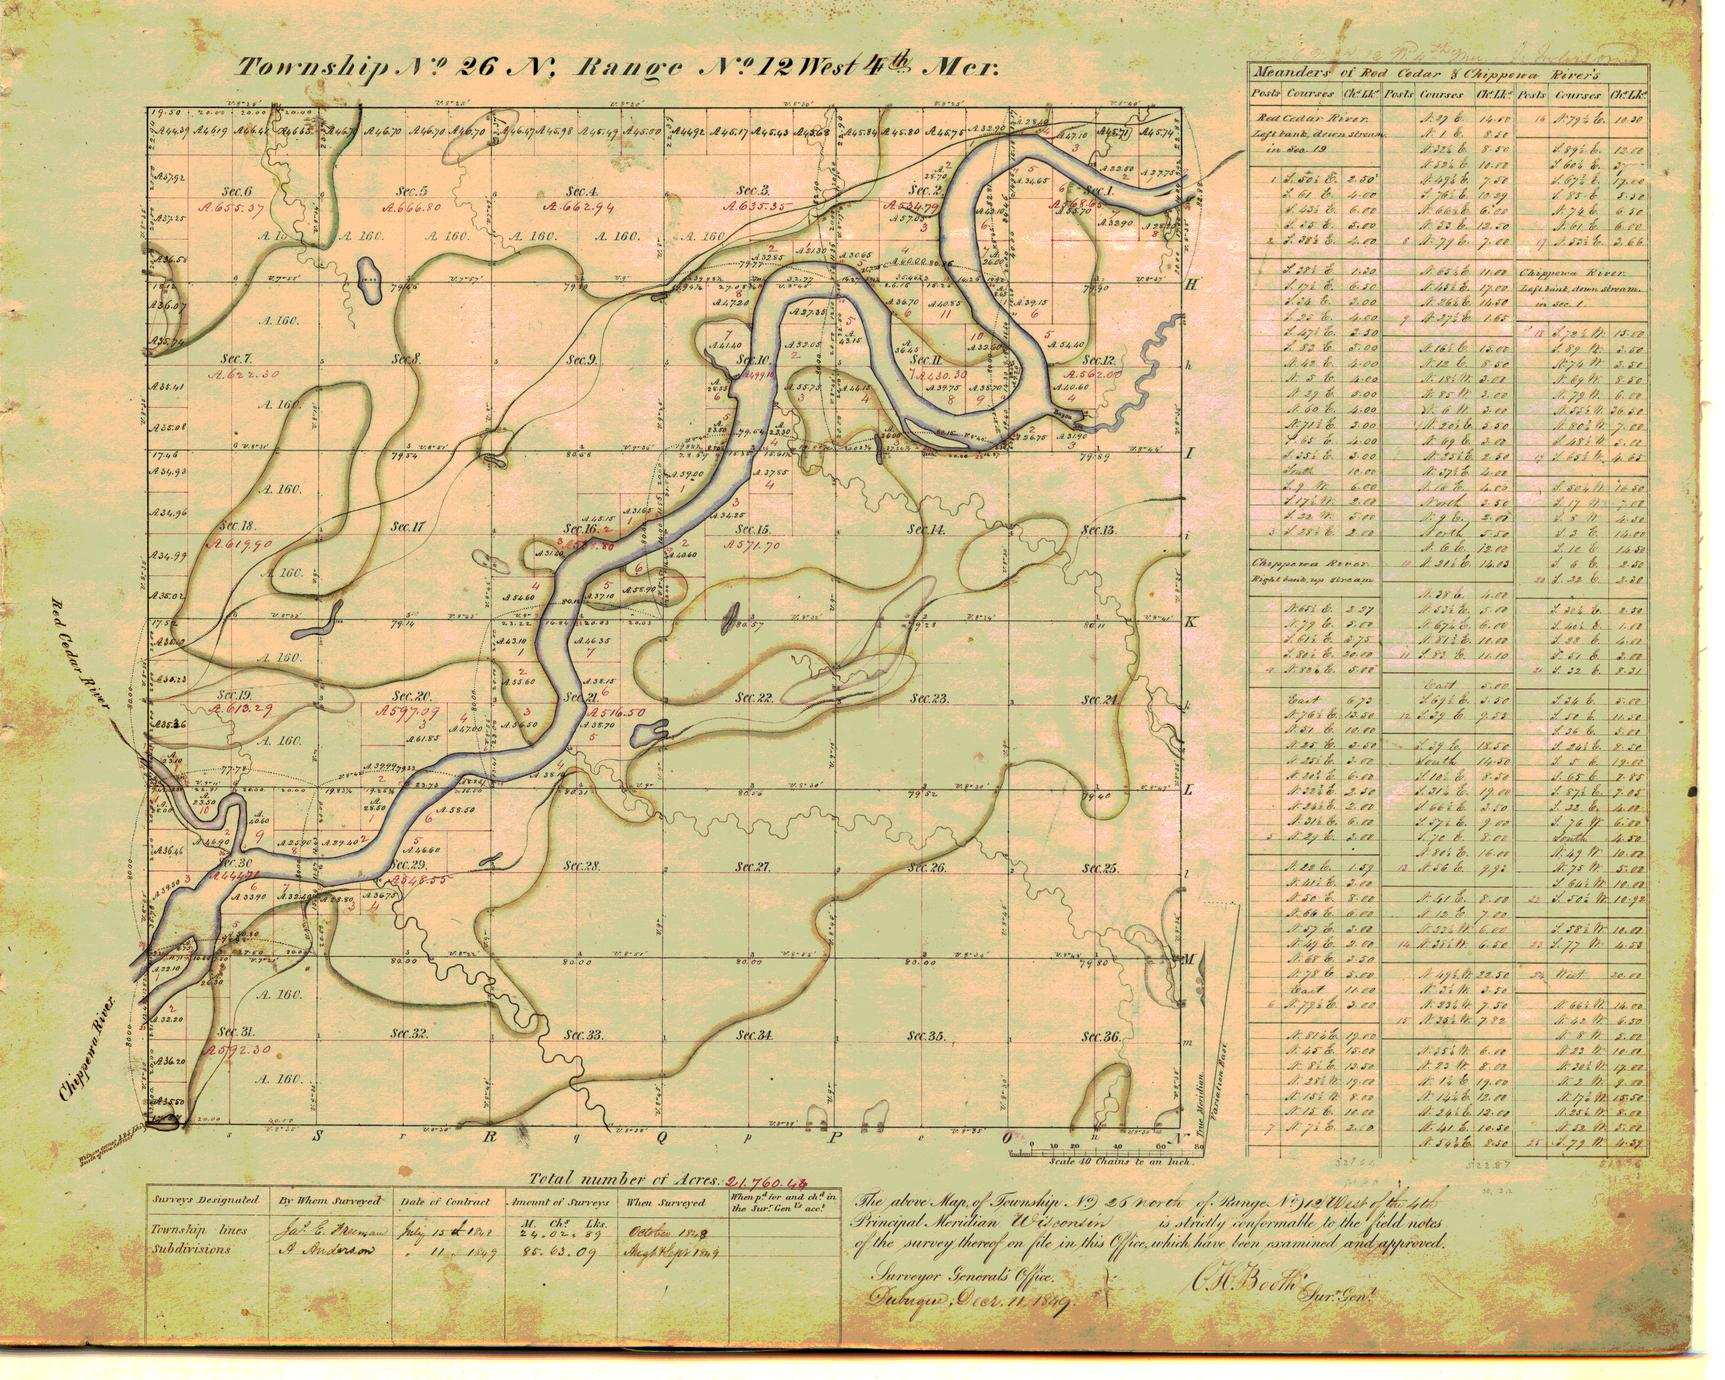 [Public Land Survey System map: Wisconsin Township 26 North, Range 12 West]